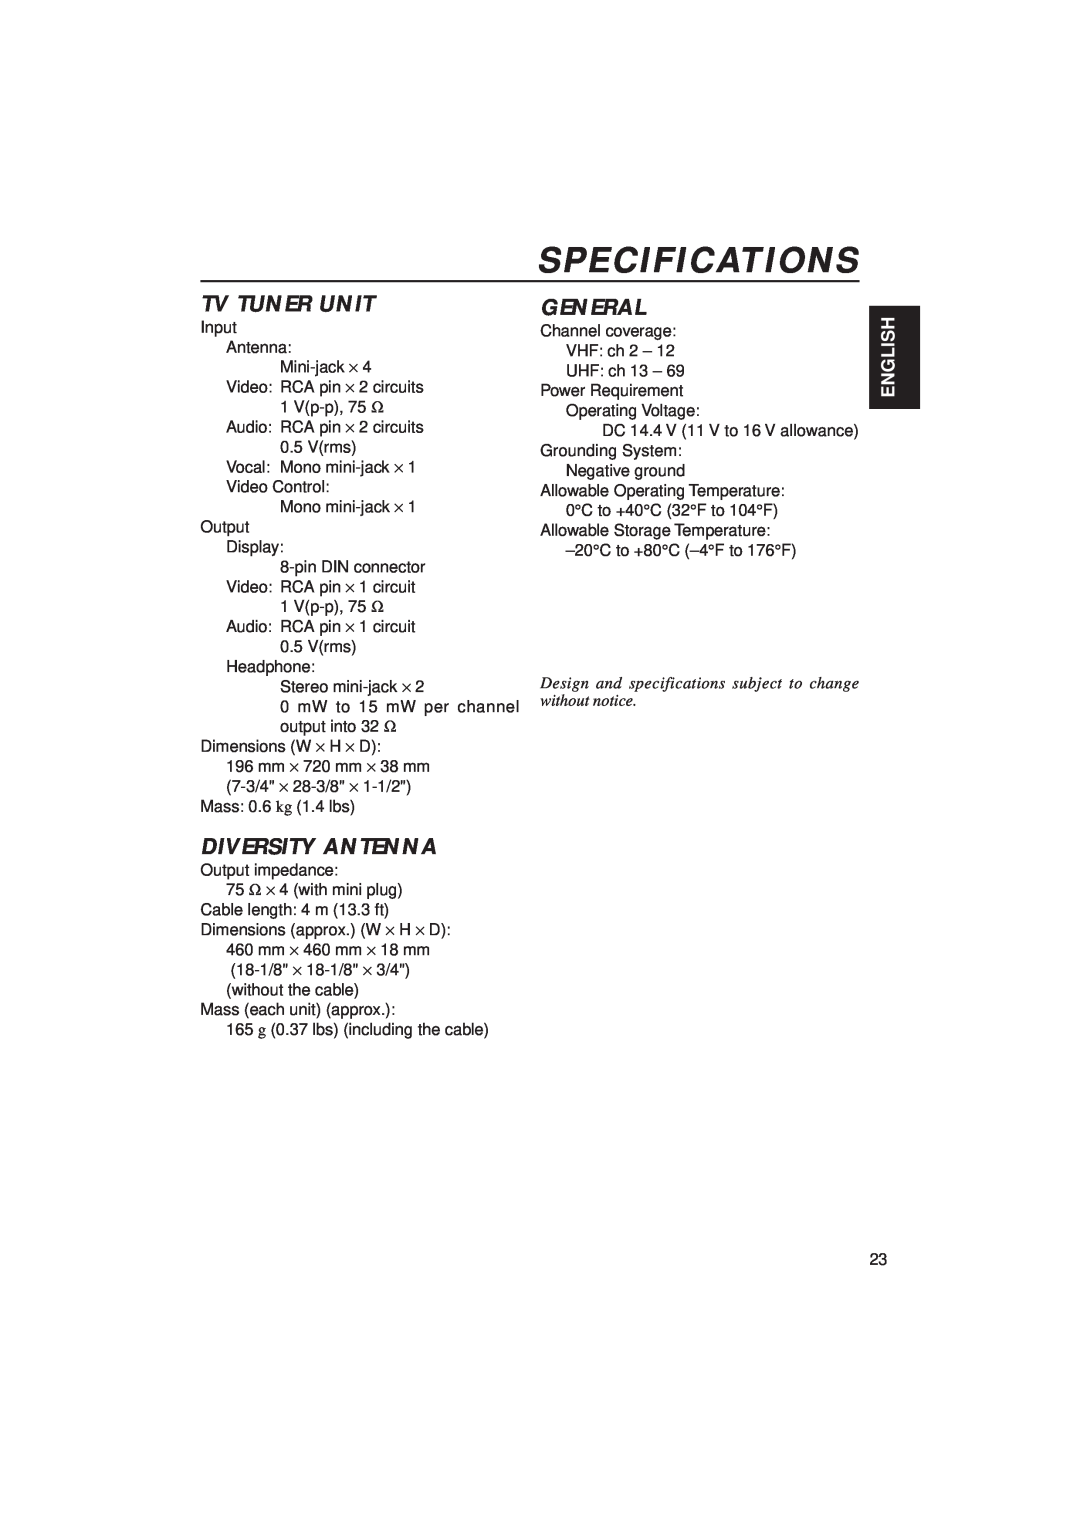 JVC KV-C10 manual Specifications, Tv Tuner Unit, General, Diversity Antenna, English 